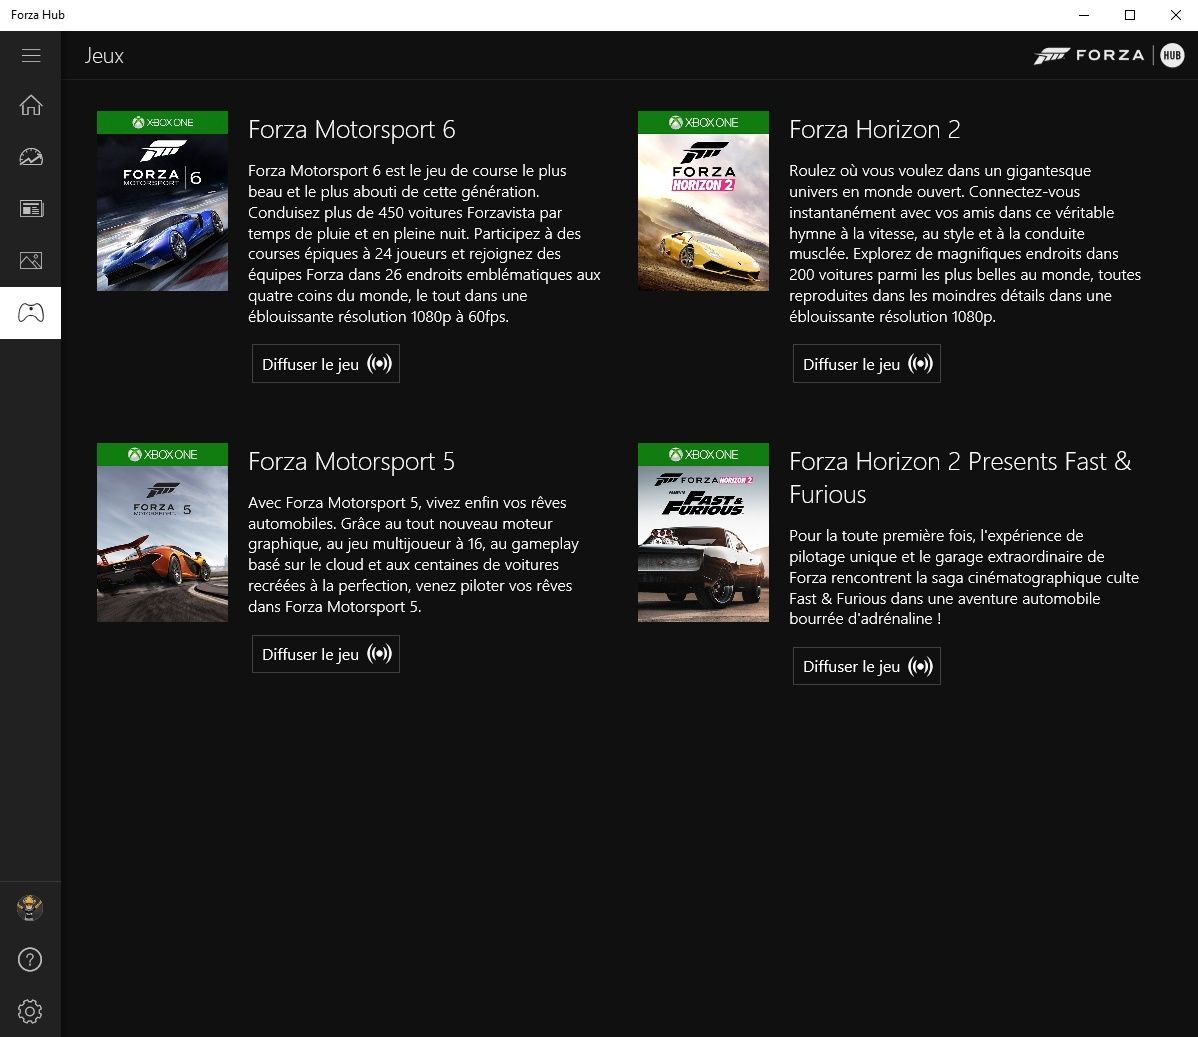 Forza Motorsport 6 : Application Forza Hub sur pc 611